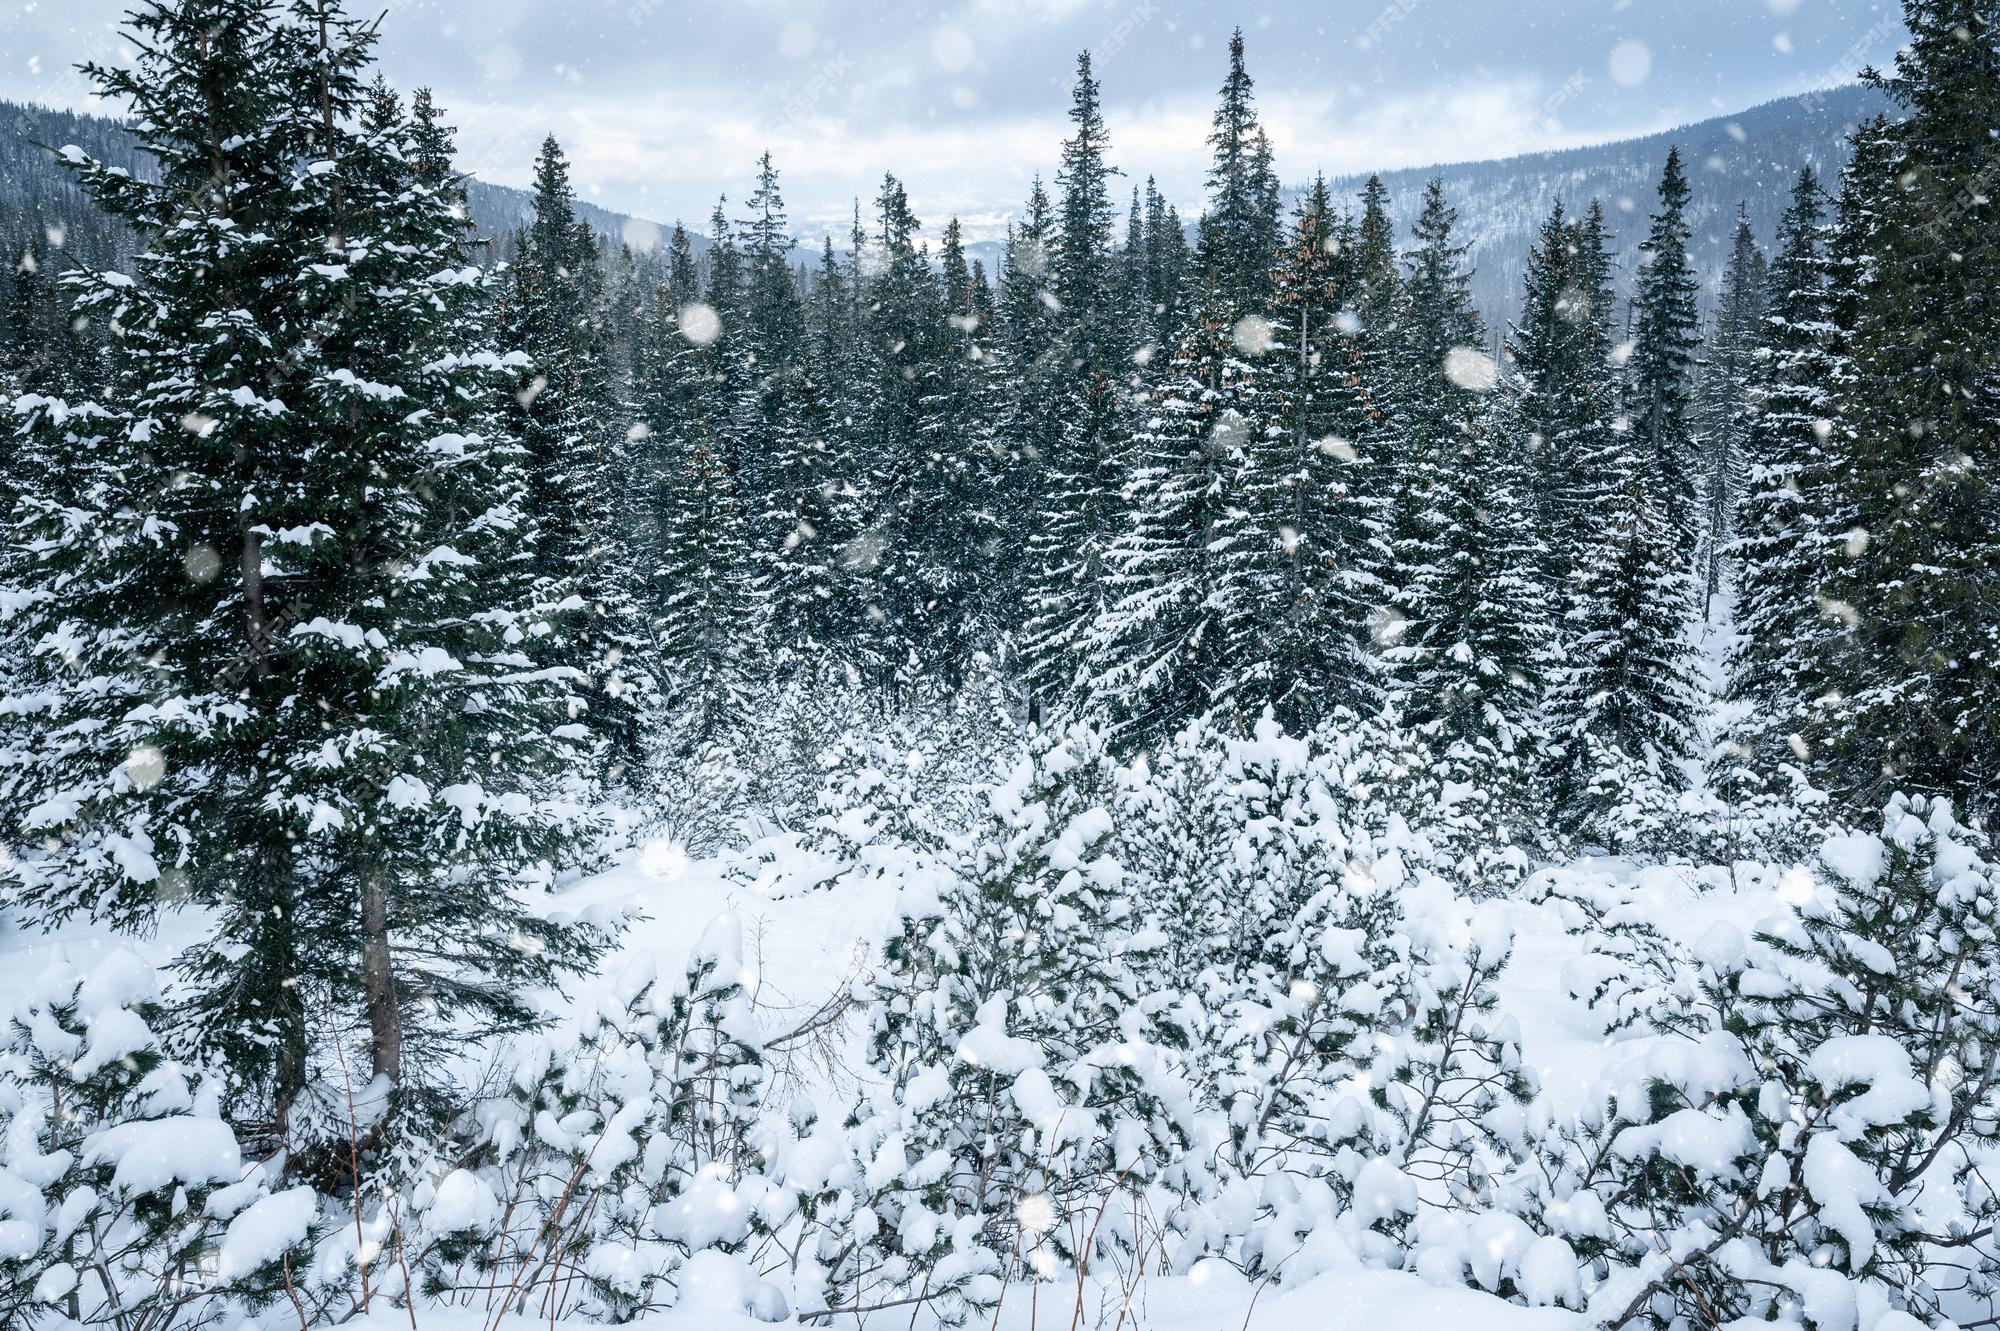 frozen-winter-forest-pine-trees-december-dreamy-atmospheric-landscape-frozen-scenery-high-quality-photo_370312-854.jpg